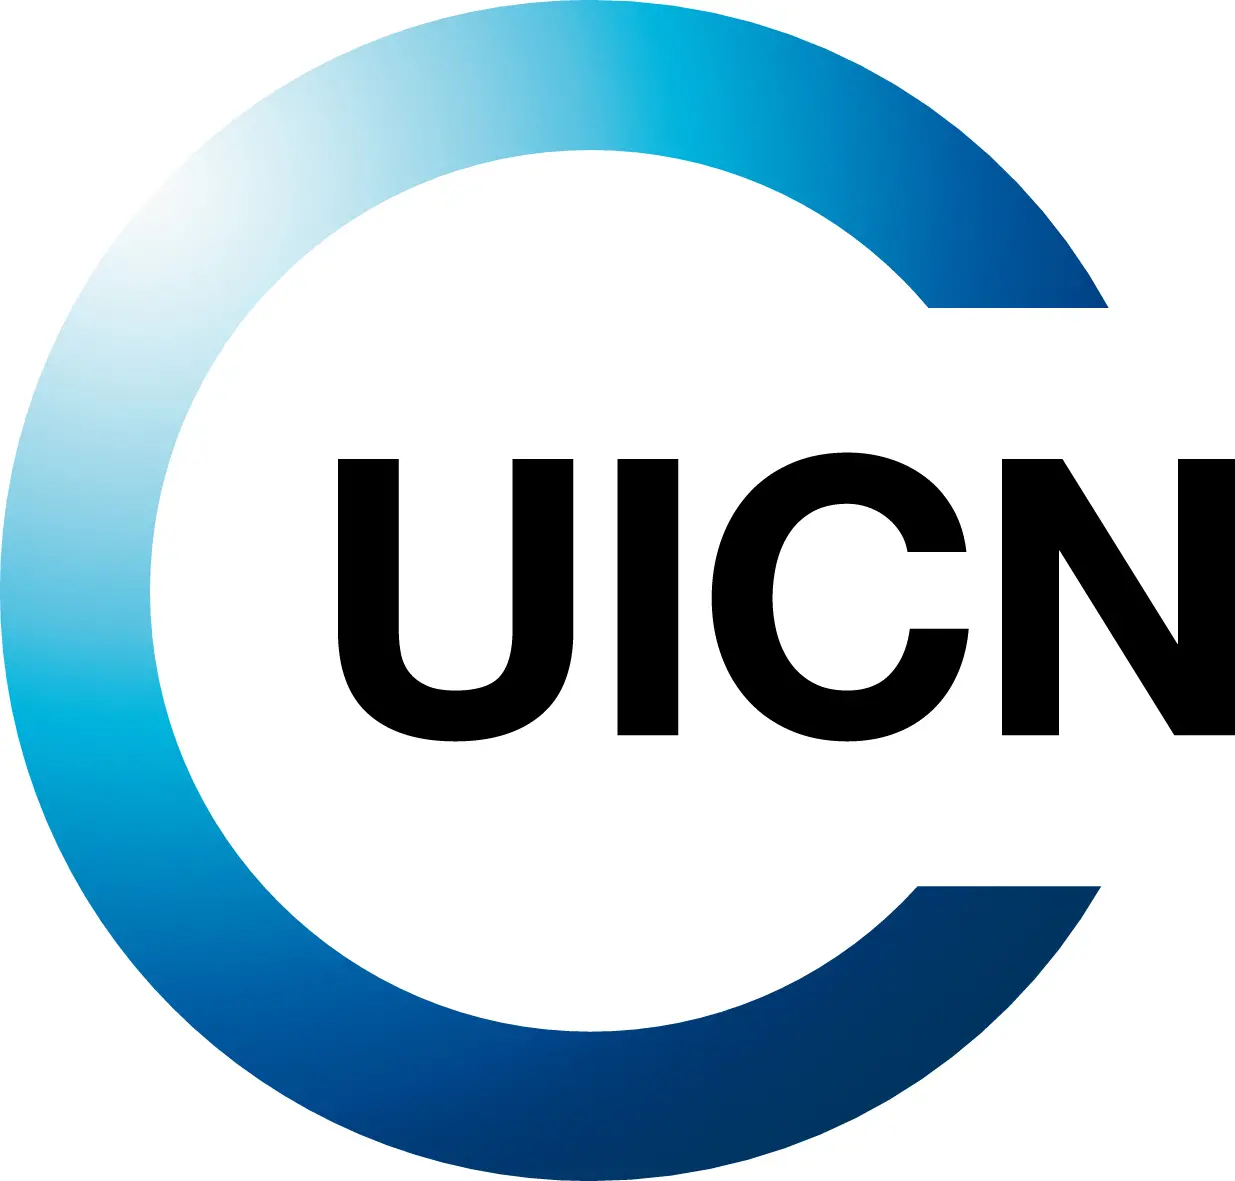 UICN logo